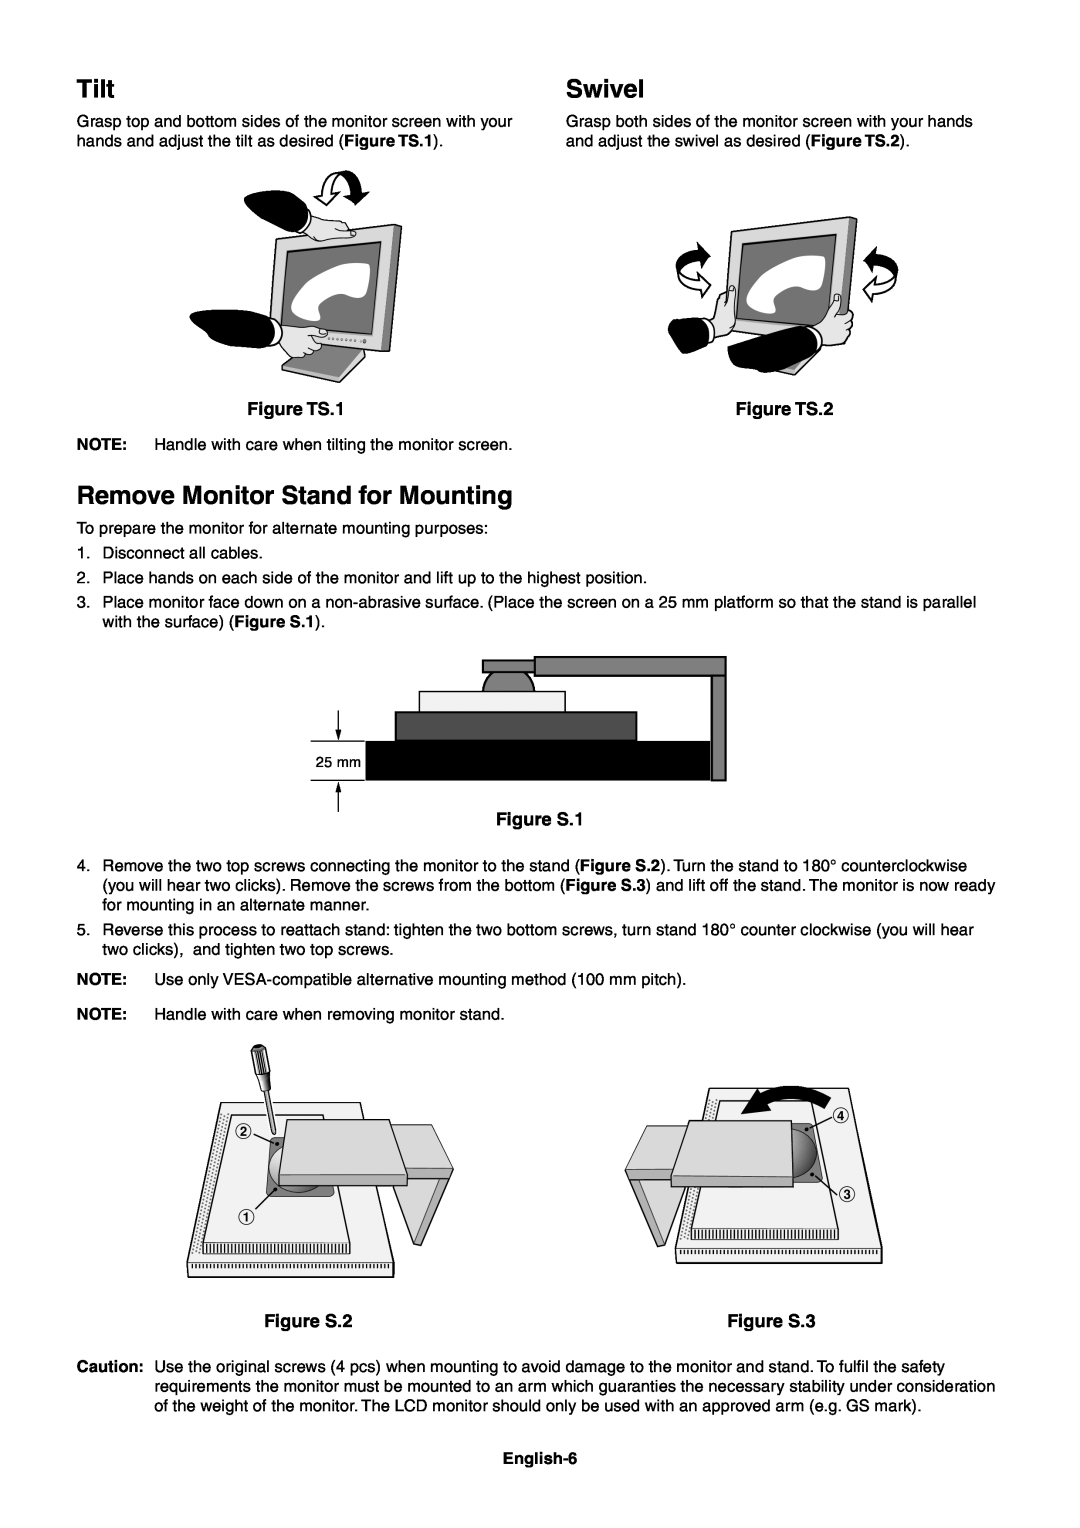 NEC LCD2080UX+ Tilt, Swivel, Remove Monitor Stand for Mounting, Figure TS.1, Figure S.1, Figure S.2, Figure S.3, English-6 